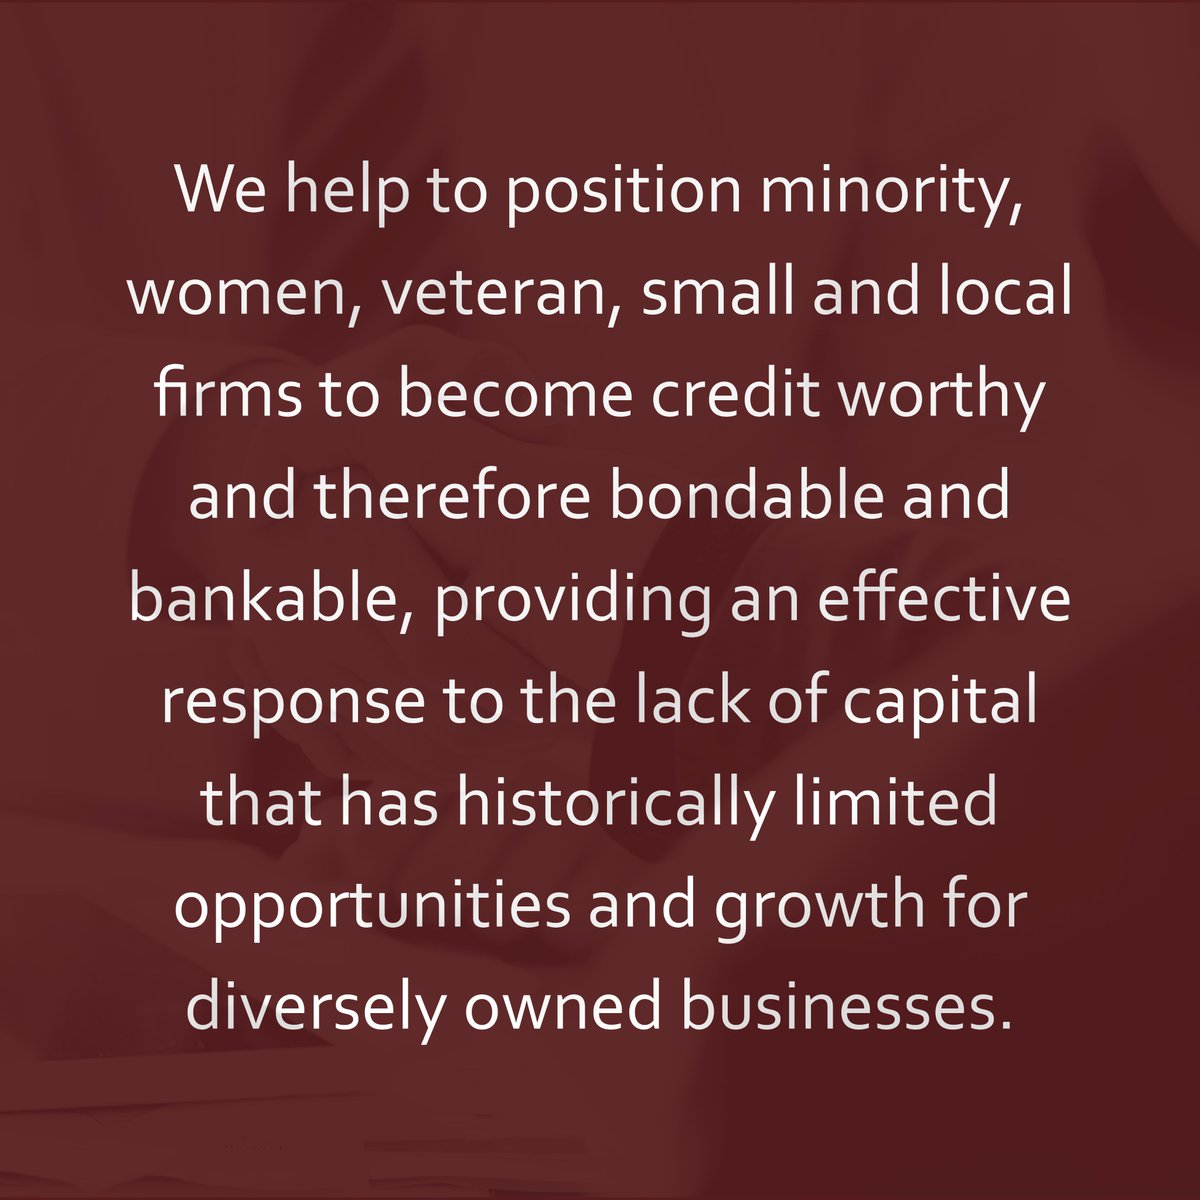 minoritybdi.org #MBE #SupplierDiversity #SDVOB #NYSMWBE #smallbiz #MWBE #Diversity #MinorityOwned #Diversesupplier #businessdiversity